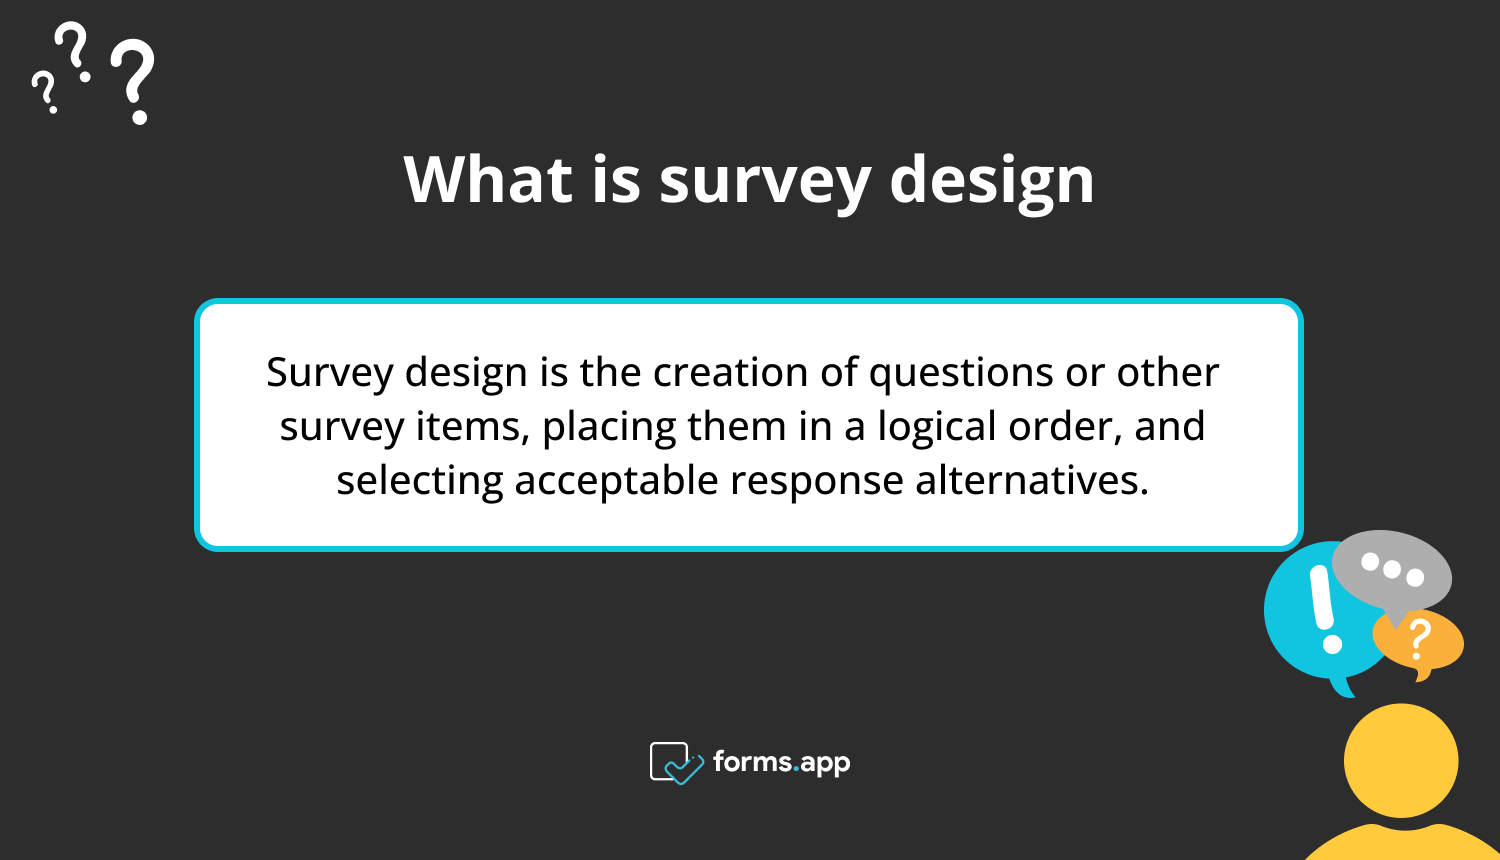 The definition of survey design